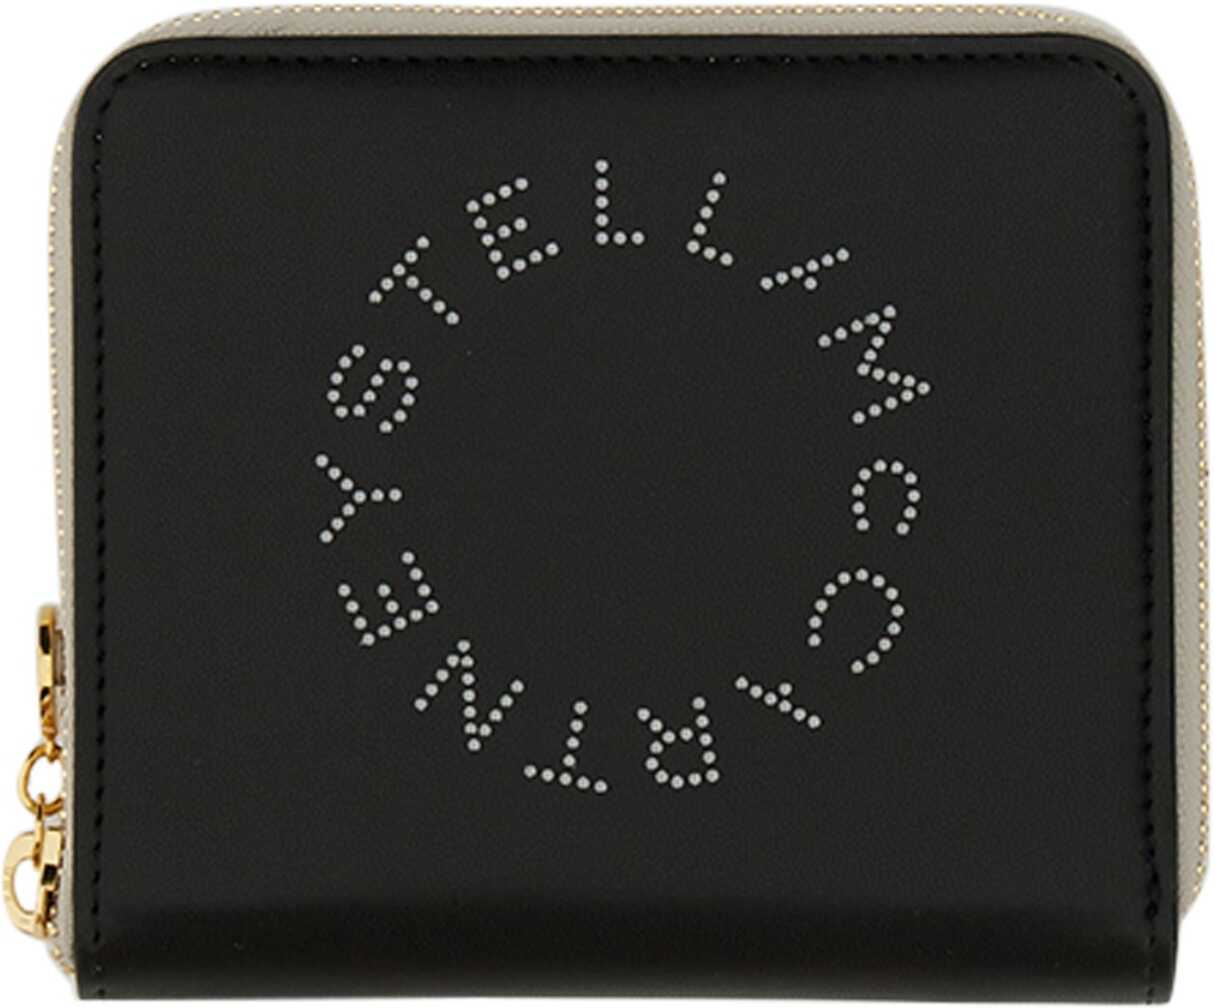 Stella McCartney Zipped Wallet BLACK image